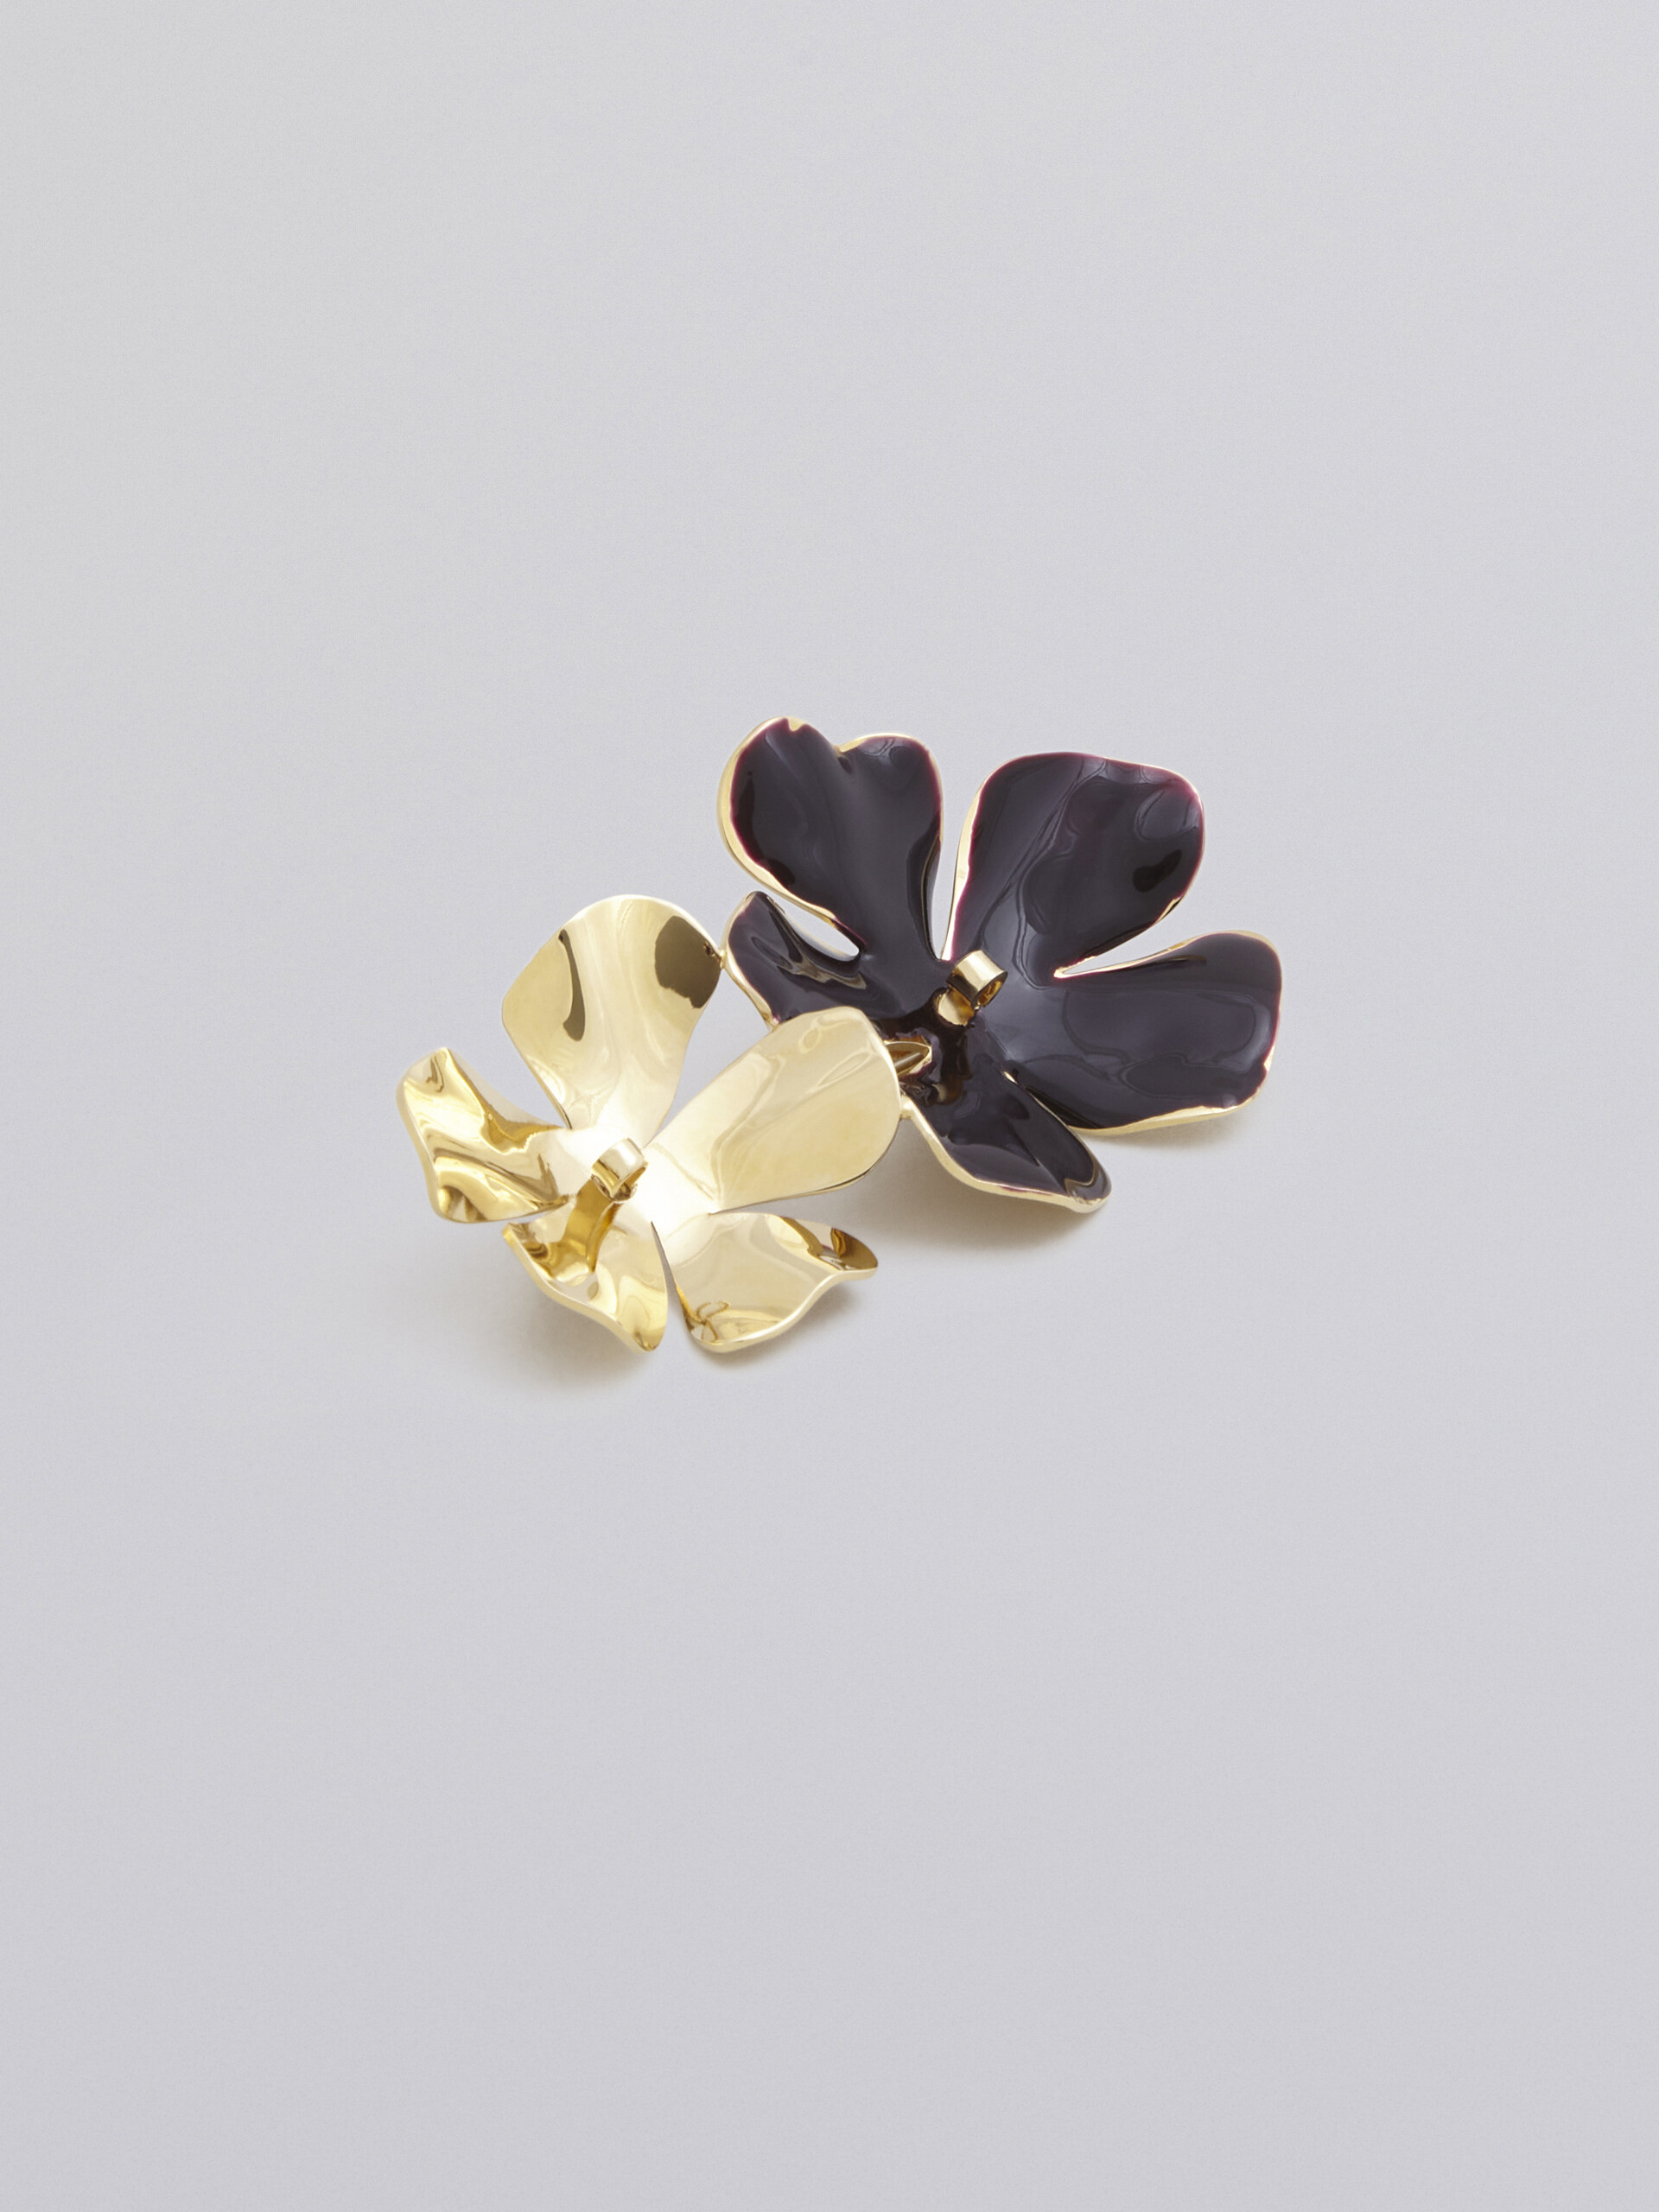 Brass FLOWER brooch in the shape of a flower with enamel petals - Broach - Image 3